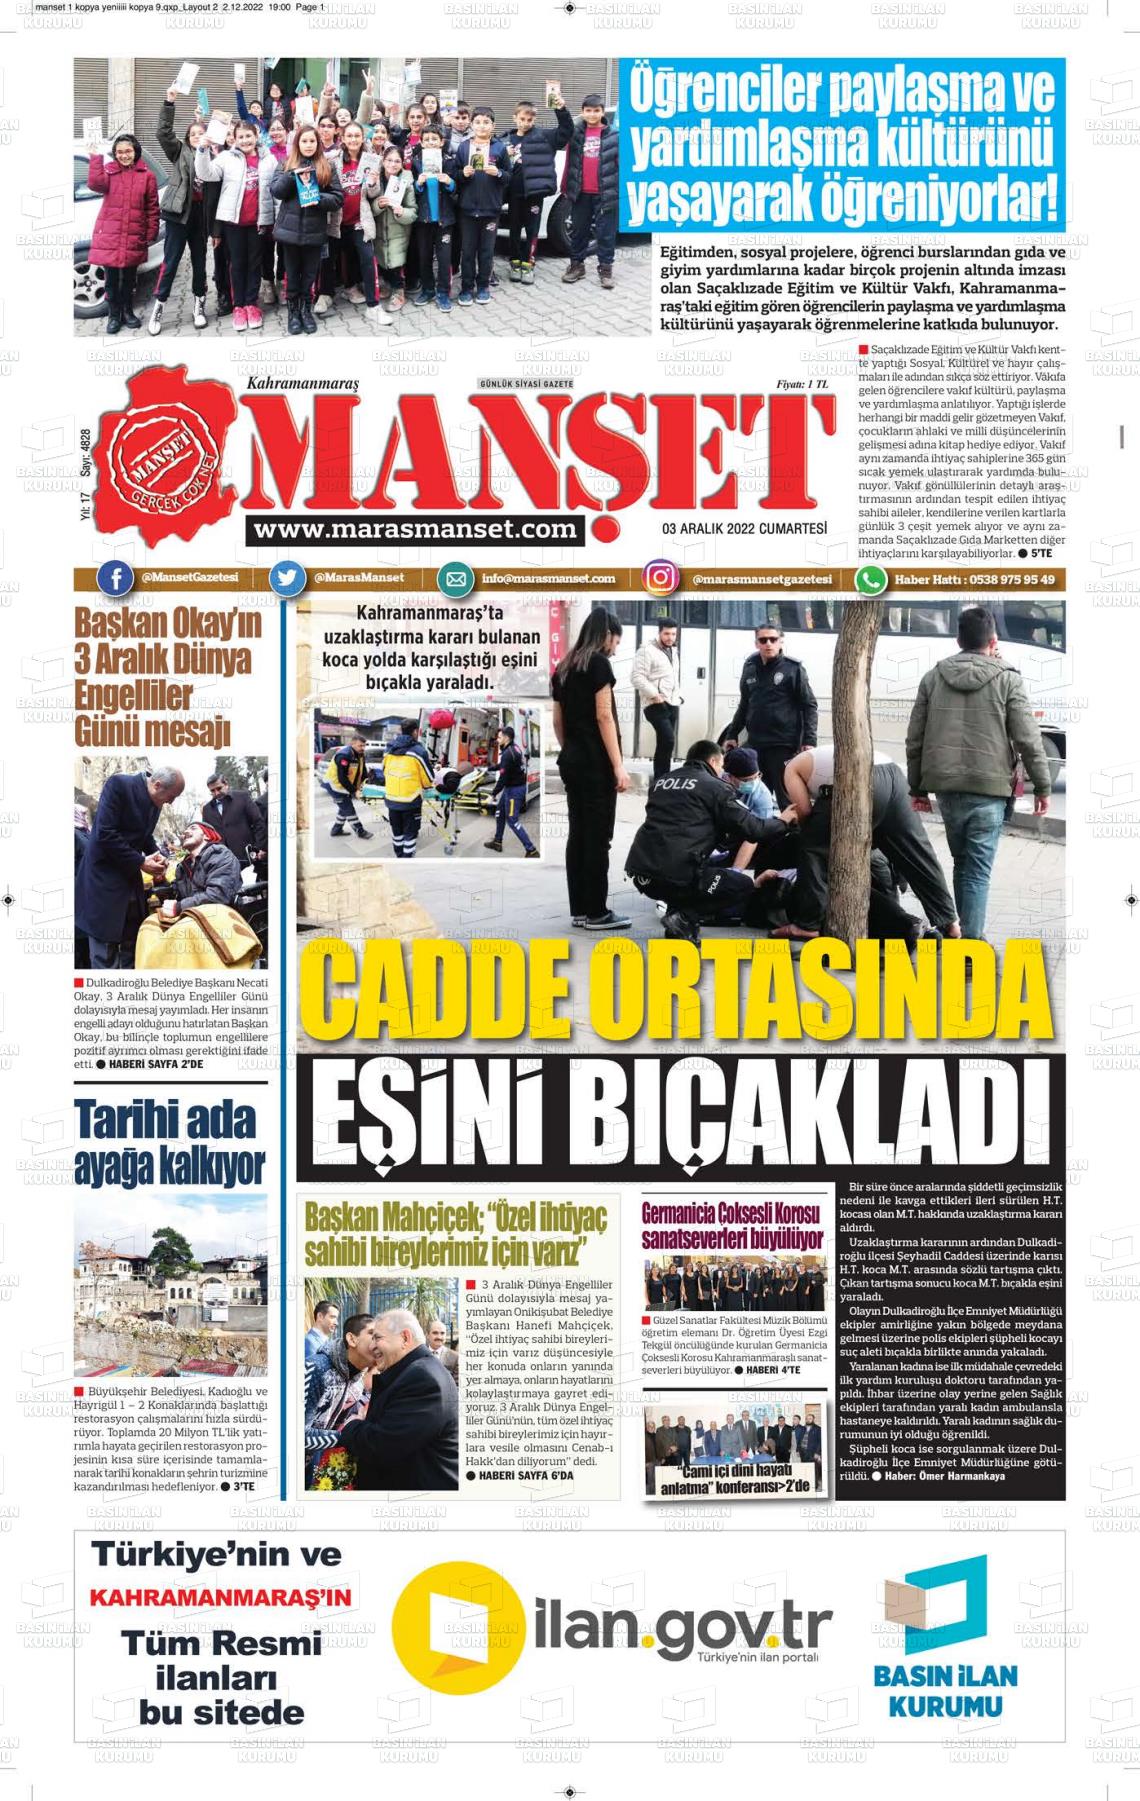 maras-manset-gazetesi-03-aralik-2022-gazete-manseti